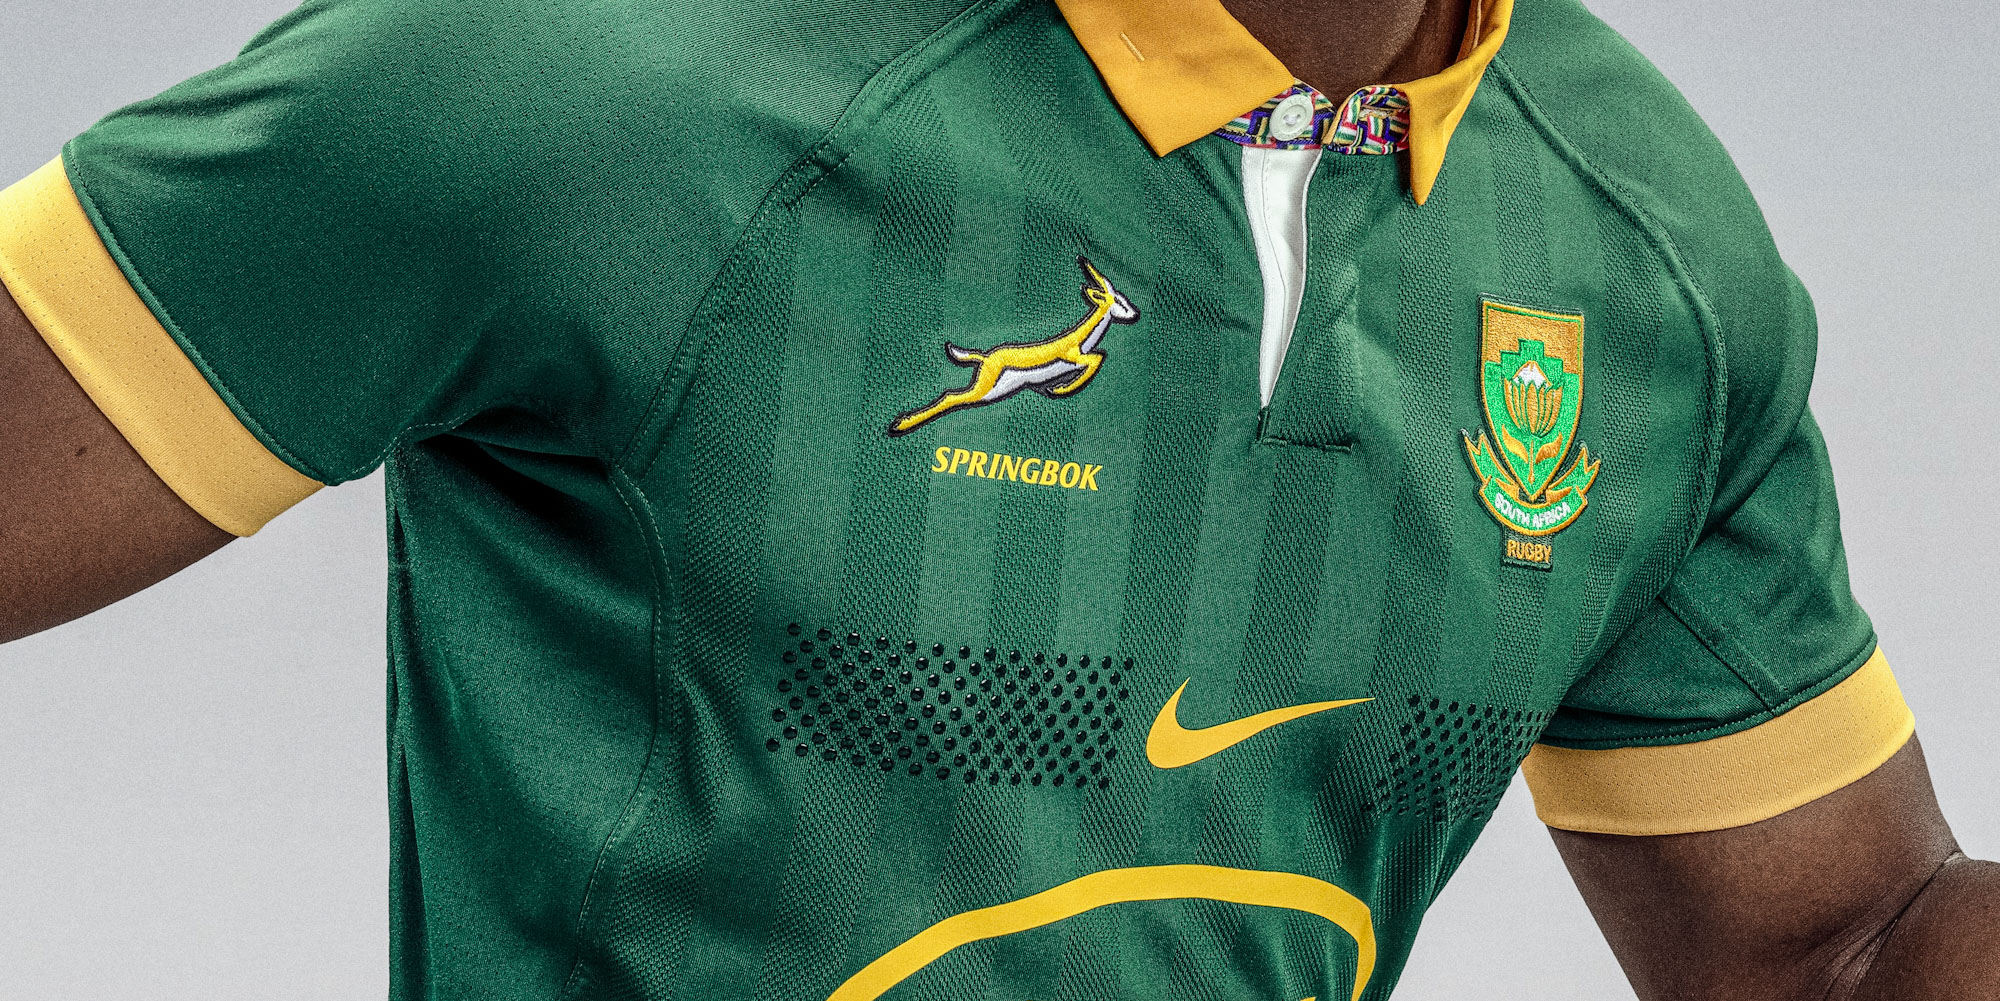 New Nike Springbok playing jersey revealed SA Sports Press